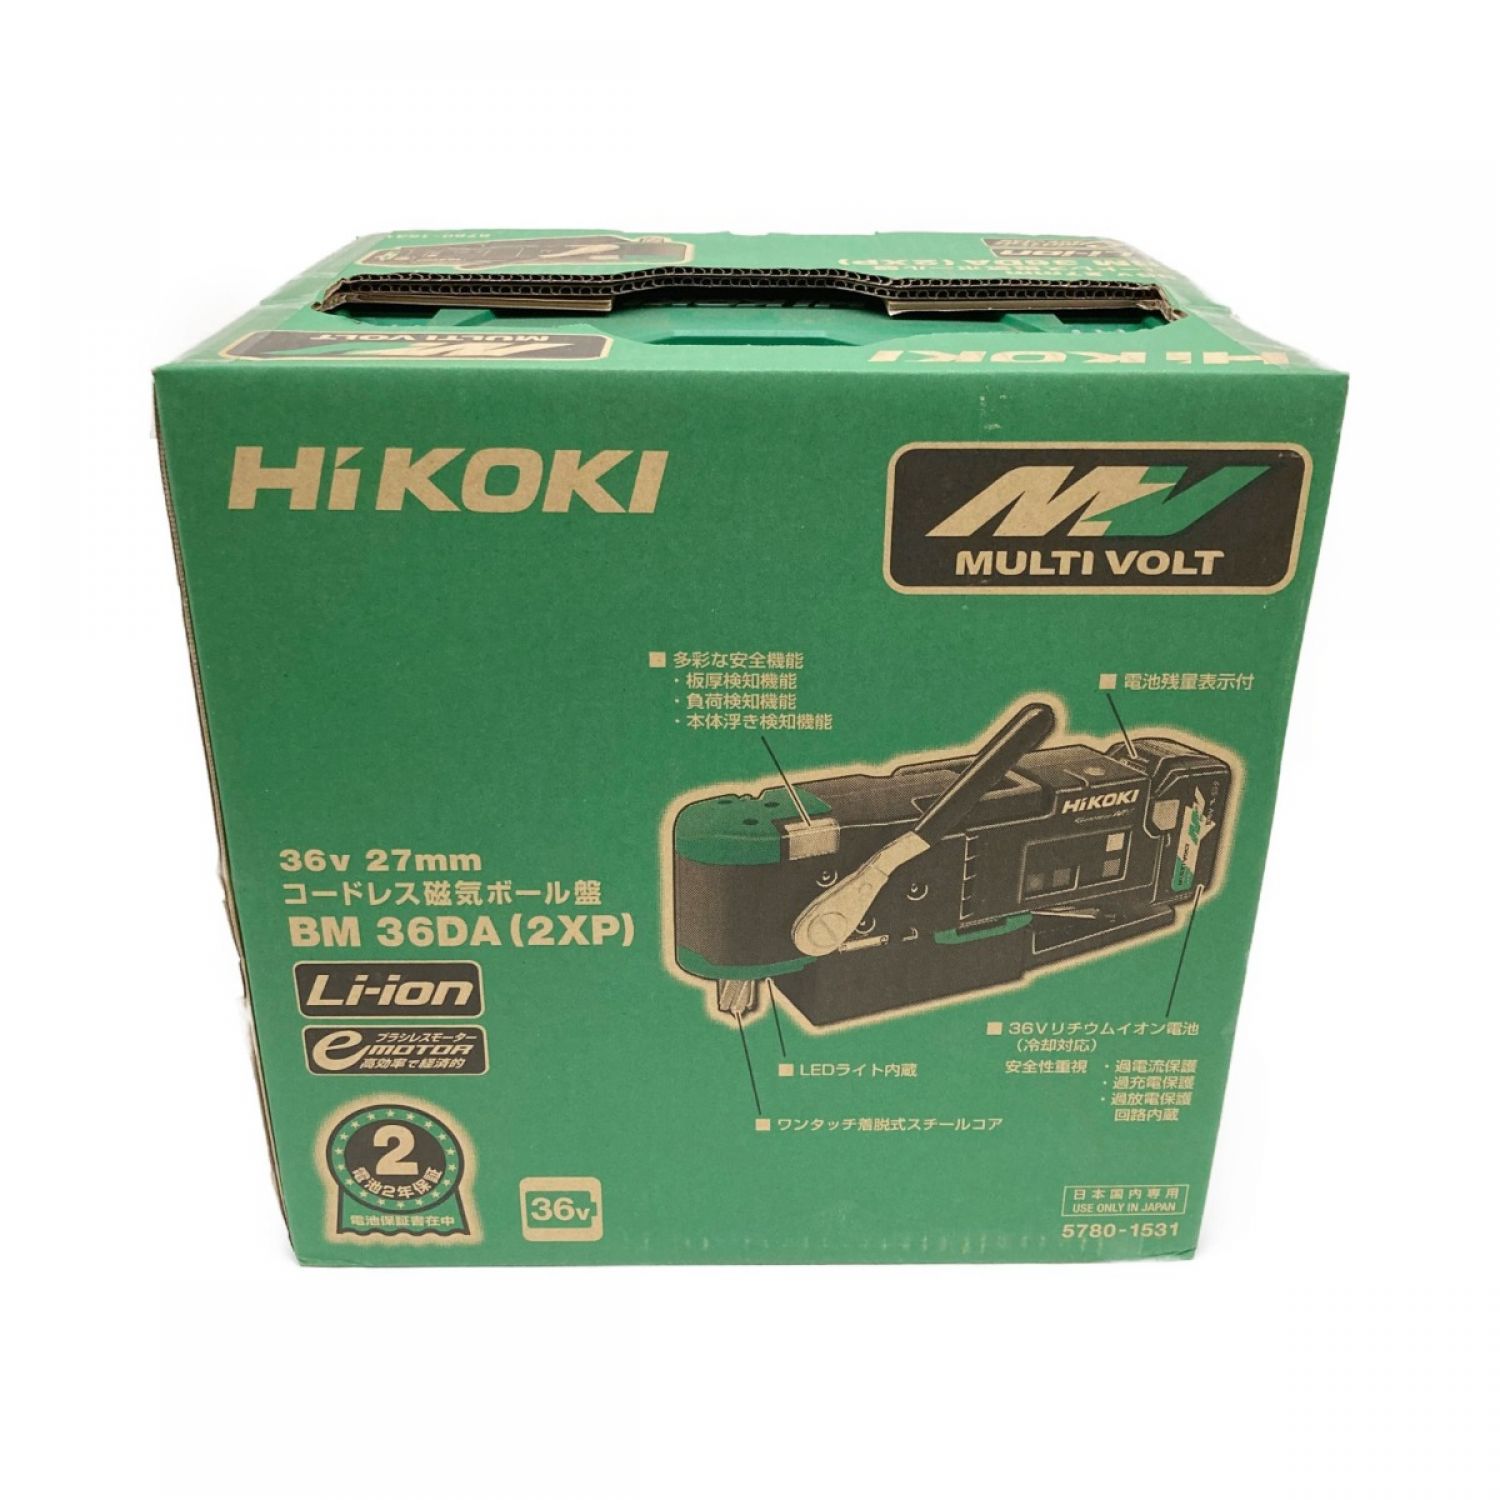 HIKOKI マルチボルト コードレス磁気ボール盤 BM36DA(2XP) - 12